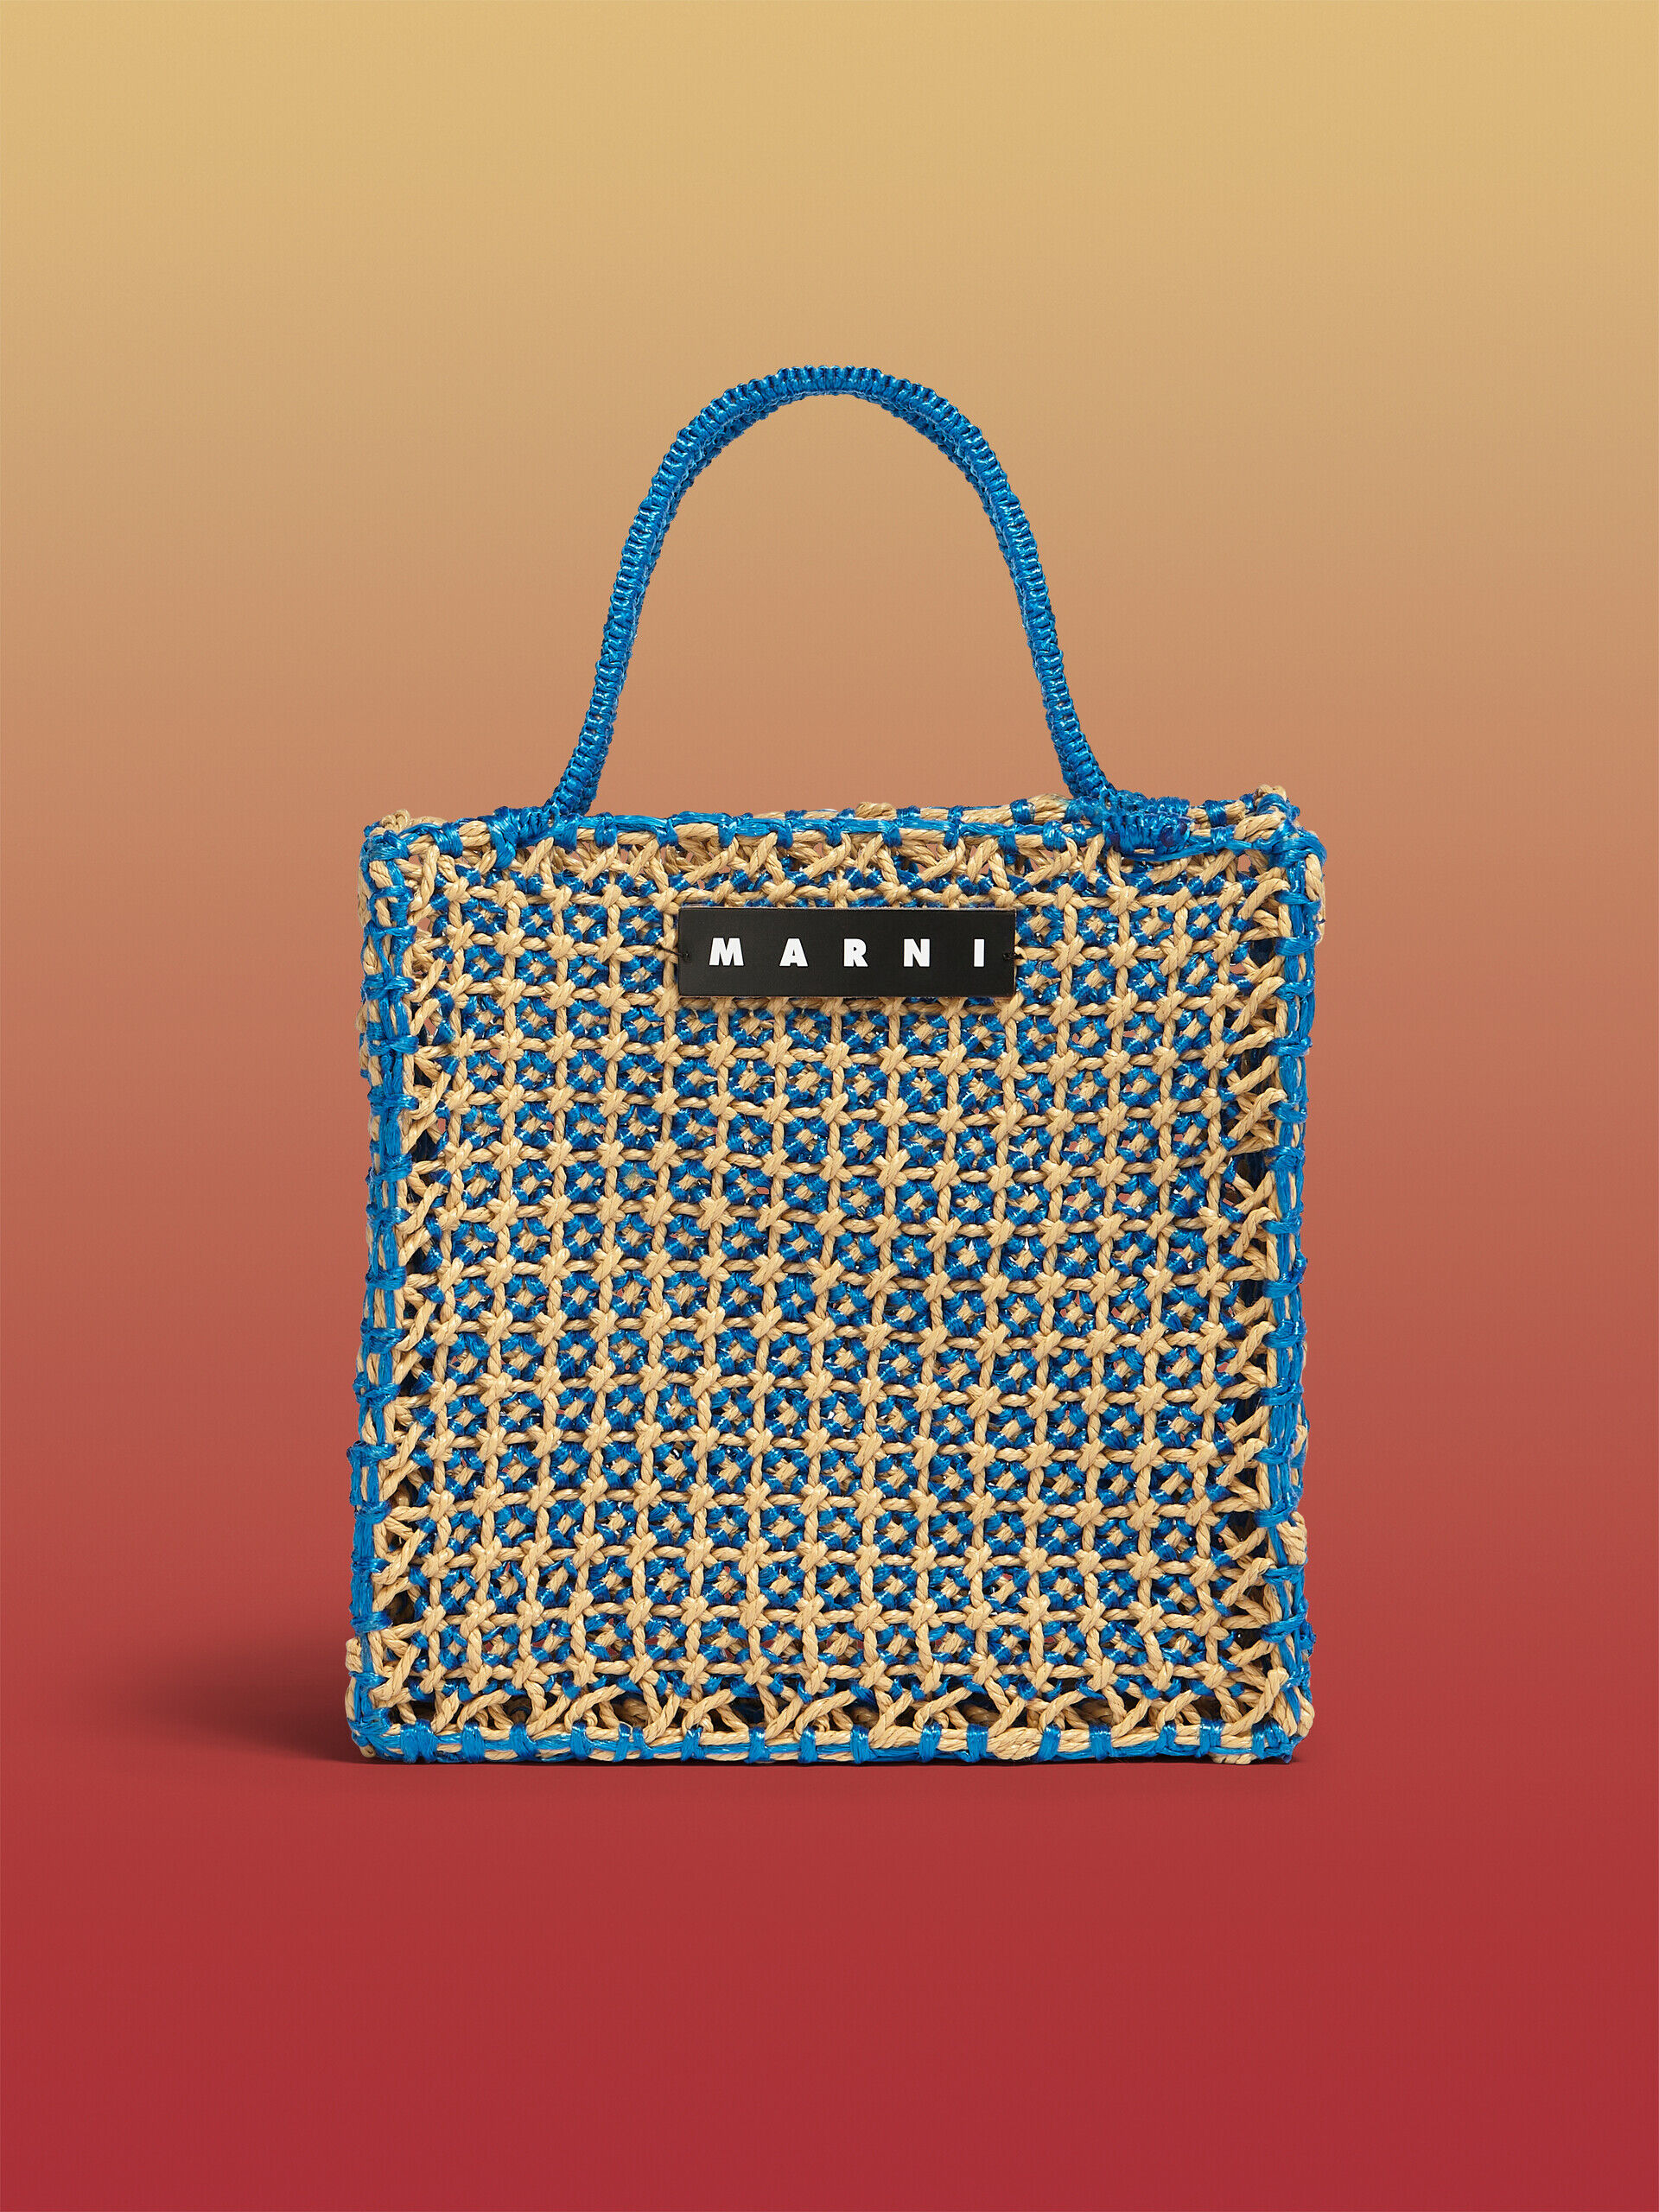 MARNI MARKET JURTA large bag in pale blue and beige crochet | Marni